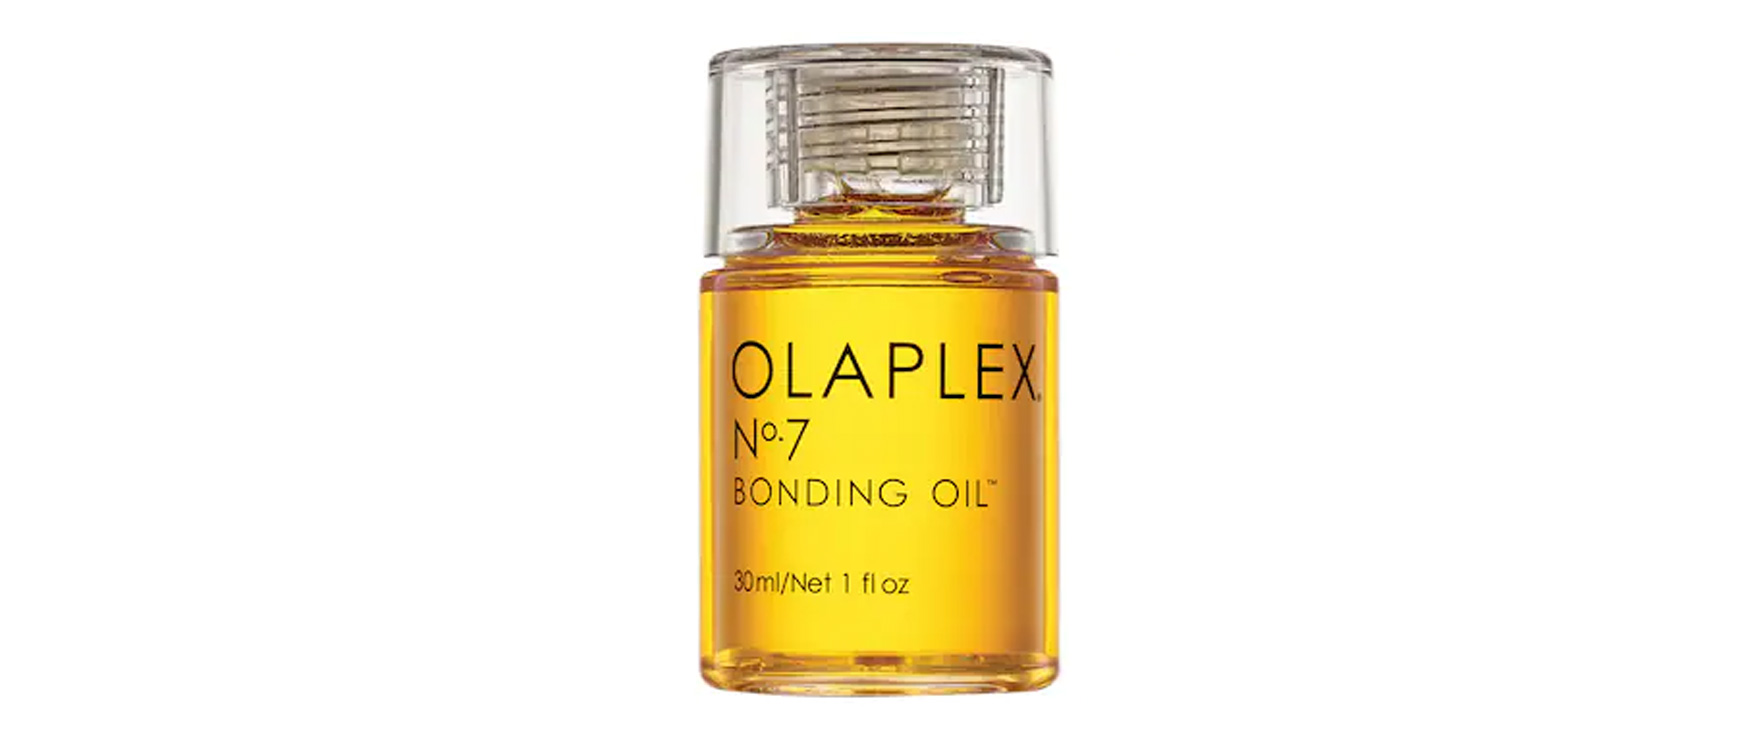 12. OLAPLEX No. 7 Bonding Oil